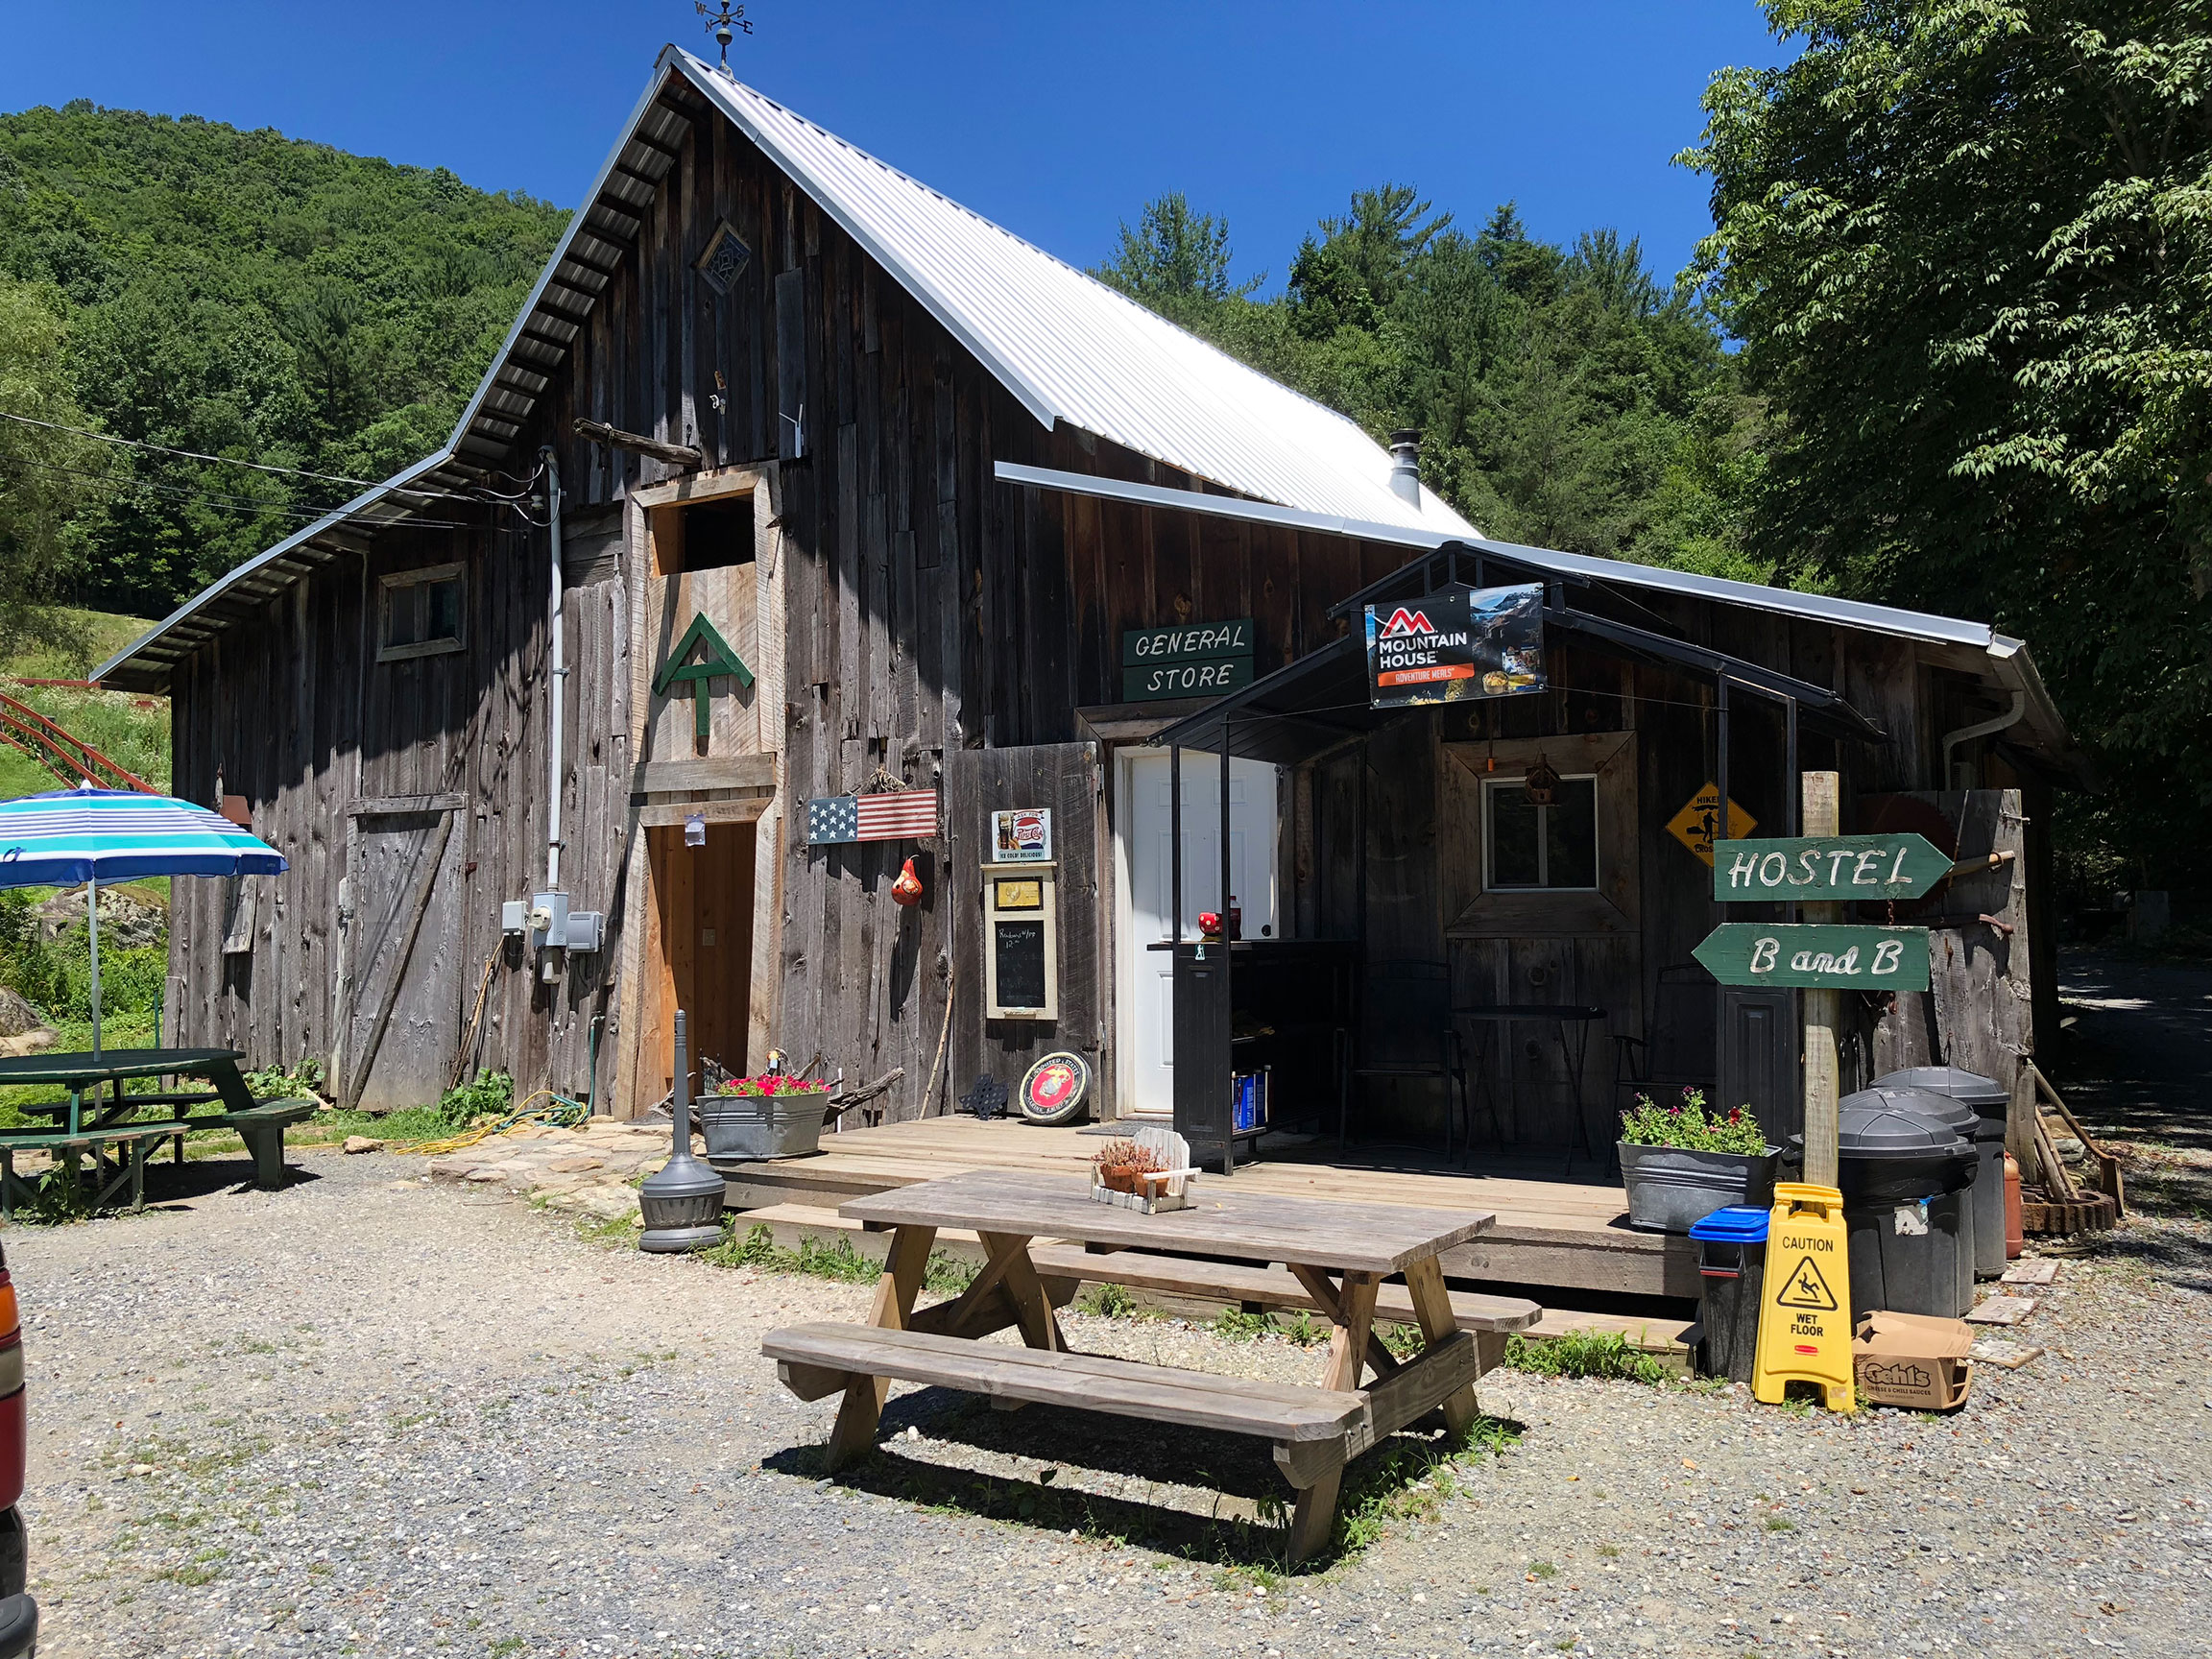 Hostel on The Appalachian Trail